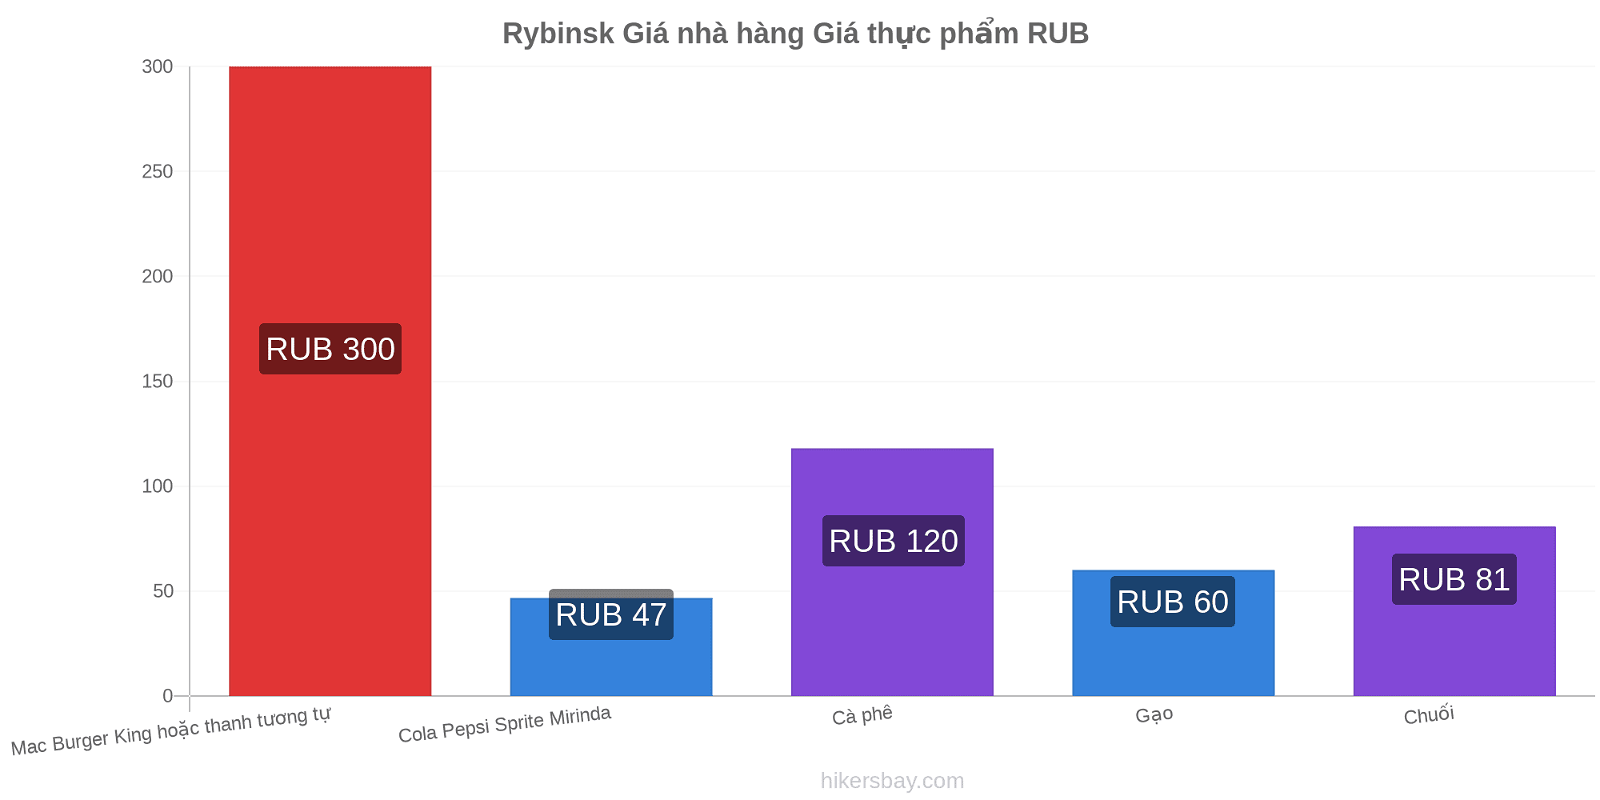 Rybinsk thay đổi giá cả hikersbay.com